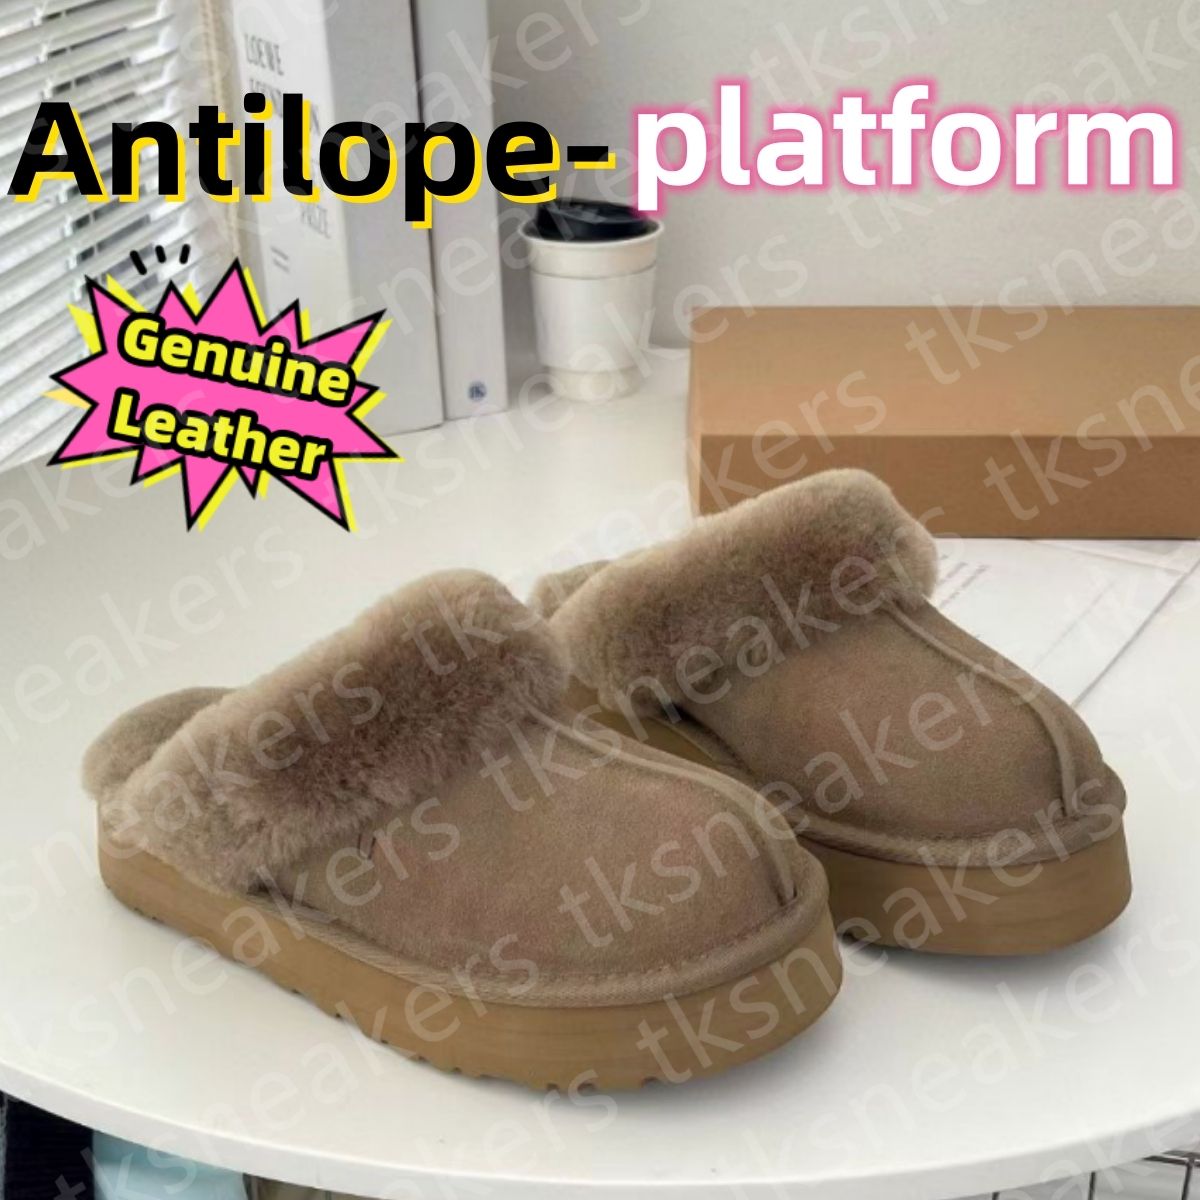 Antilope-platform